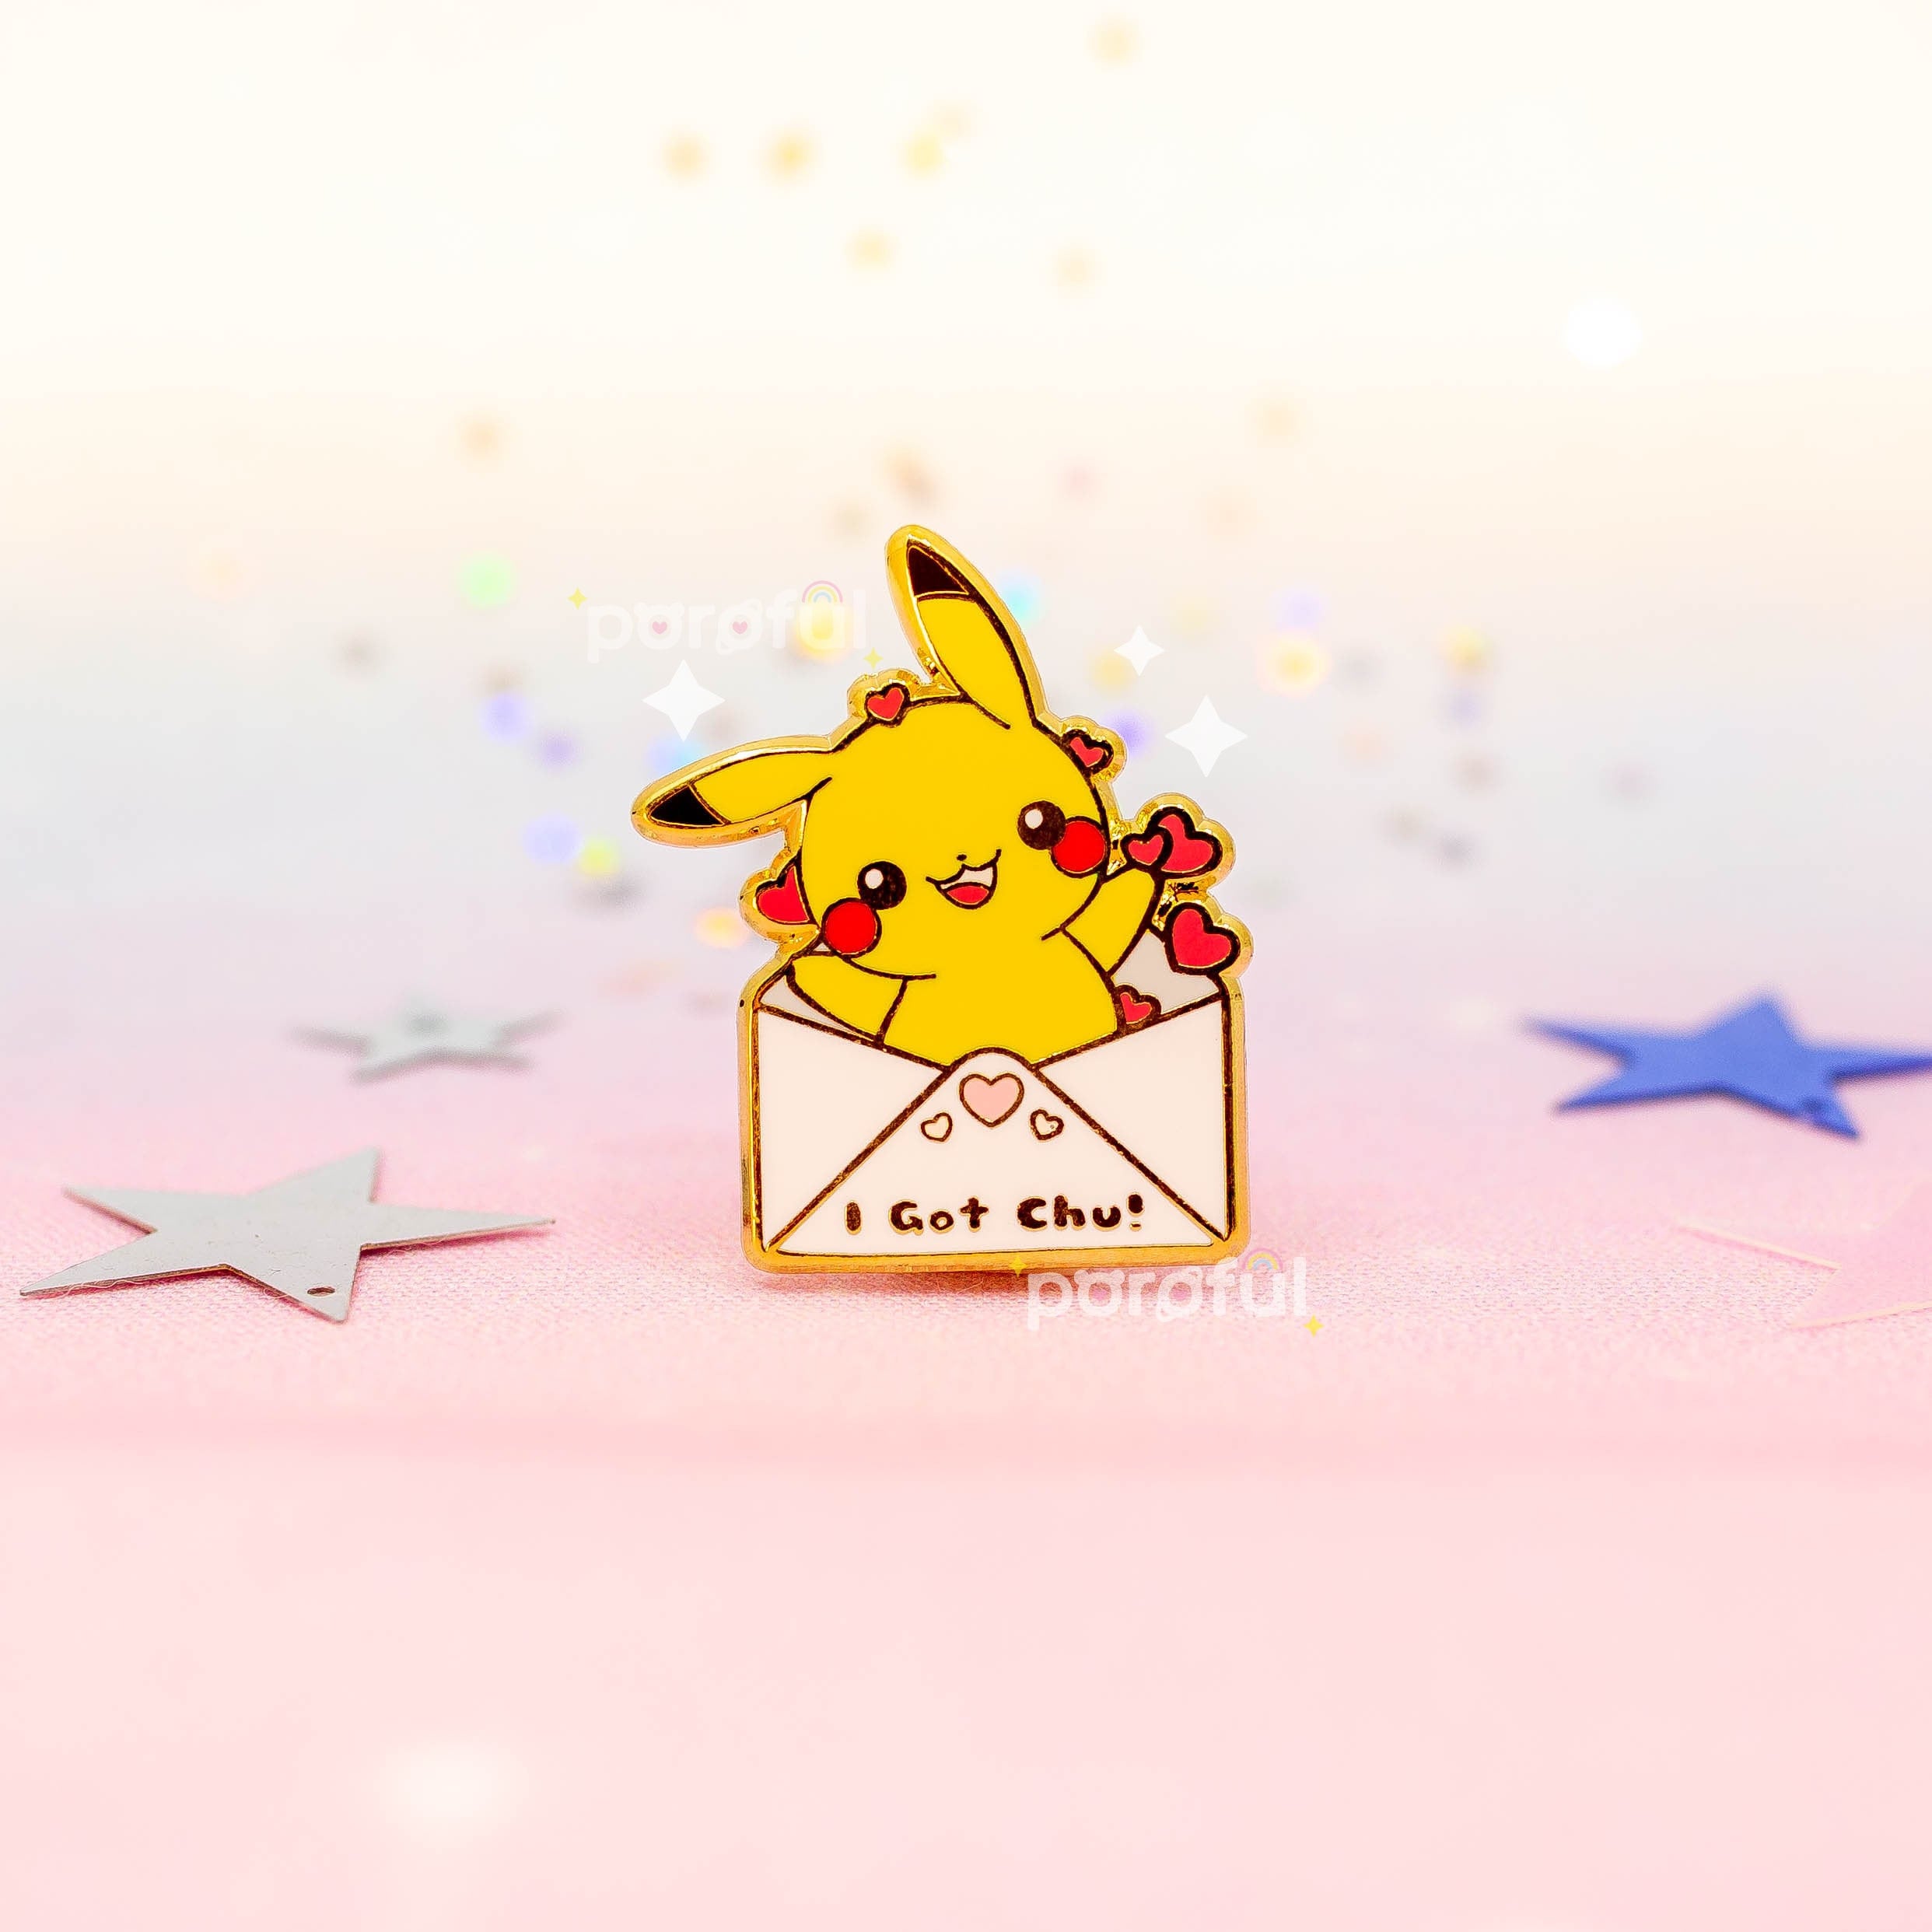 A pikachu is sitting on top of an envelope - Pikachu, Pokemon